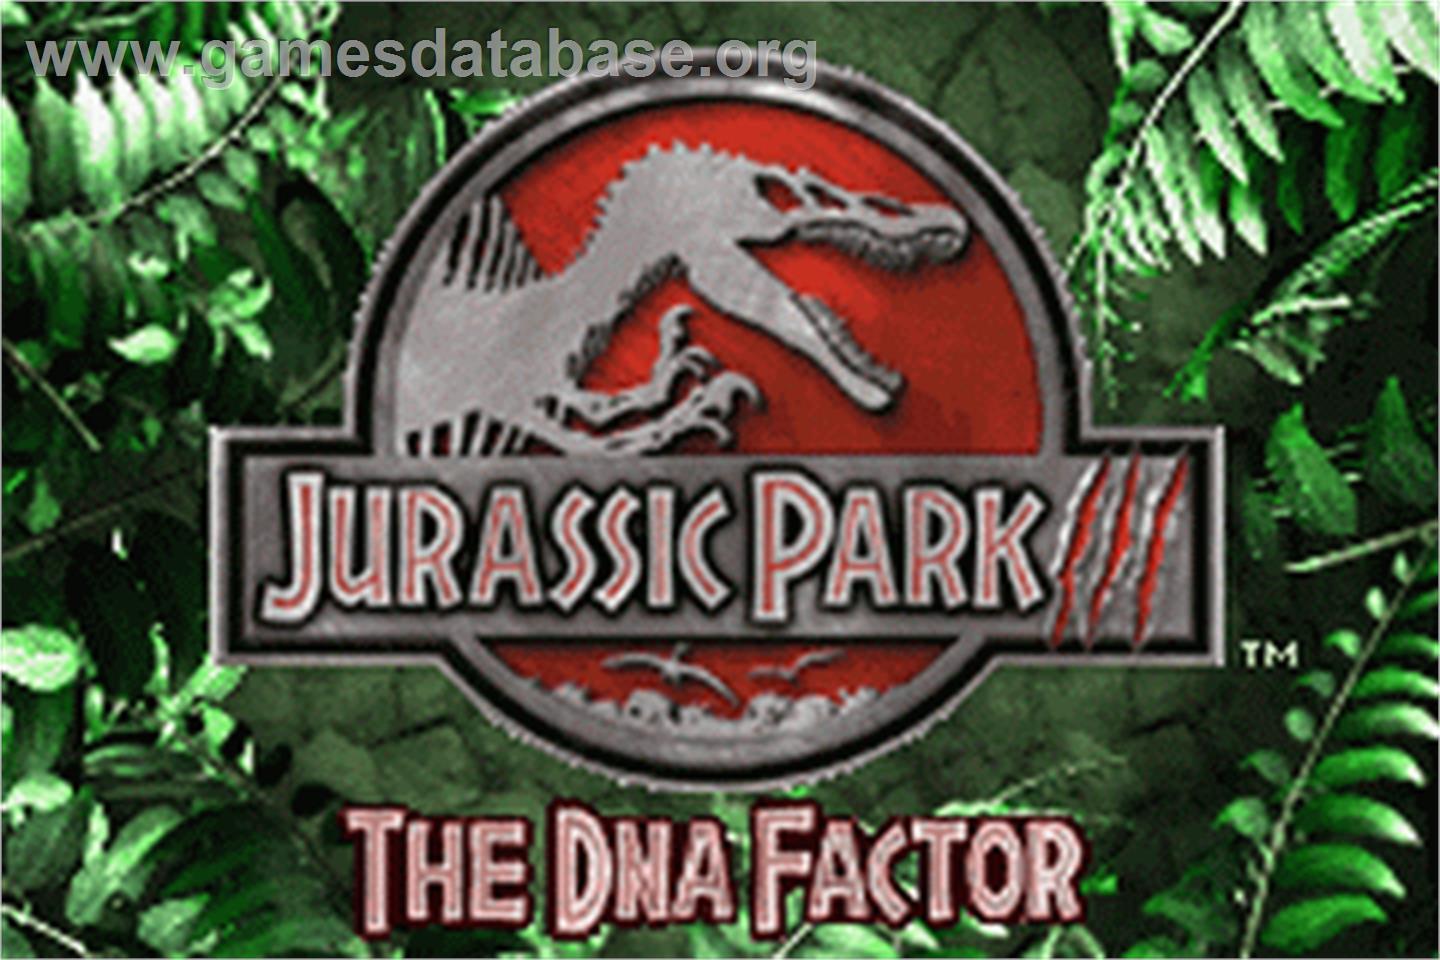 Jurassic Park III: The DNA Factor - Nintendo Game Boy Advance - Artwork - Title Screen